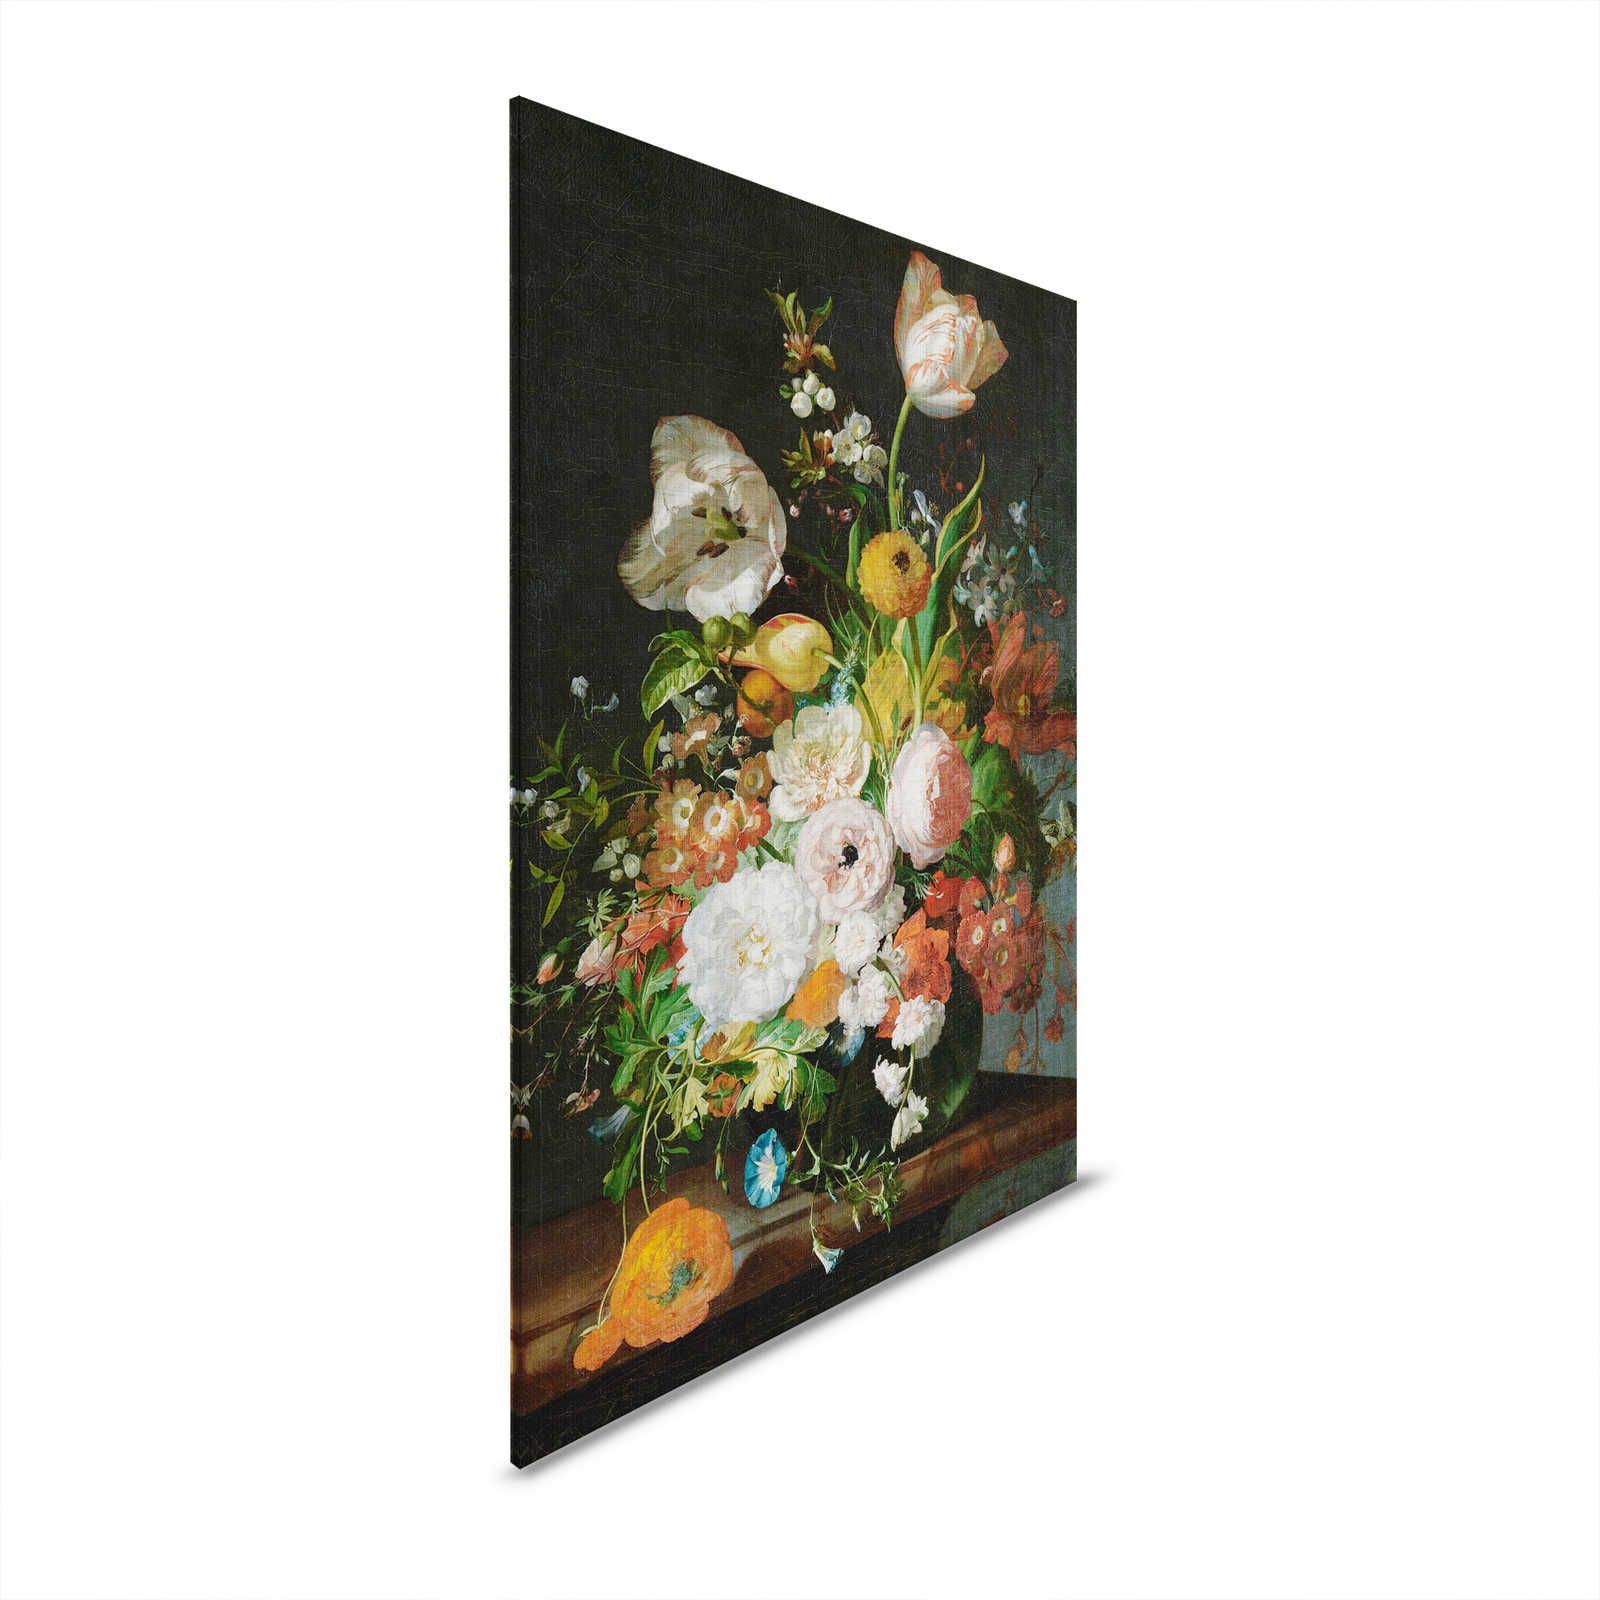         Artists Studio 2 - Canvas painting Flowers Bouquet Painting Art style - 0,60 m x 0,90 m
    